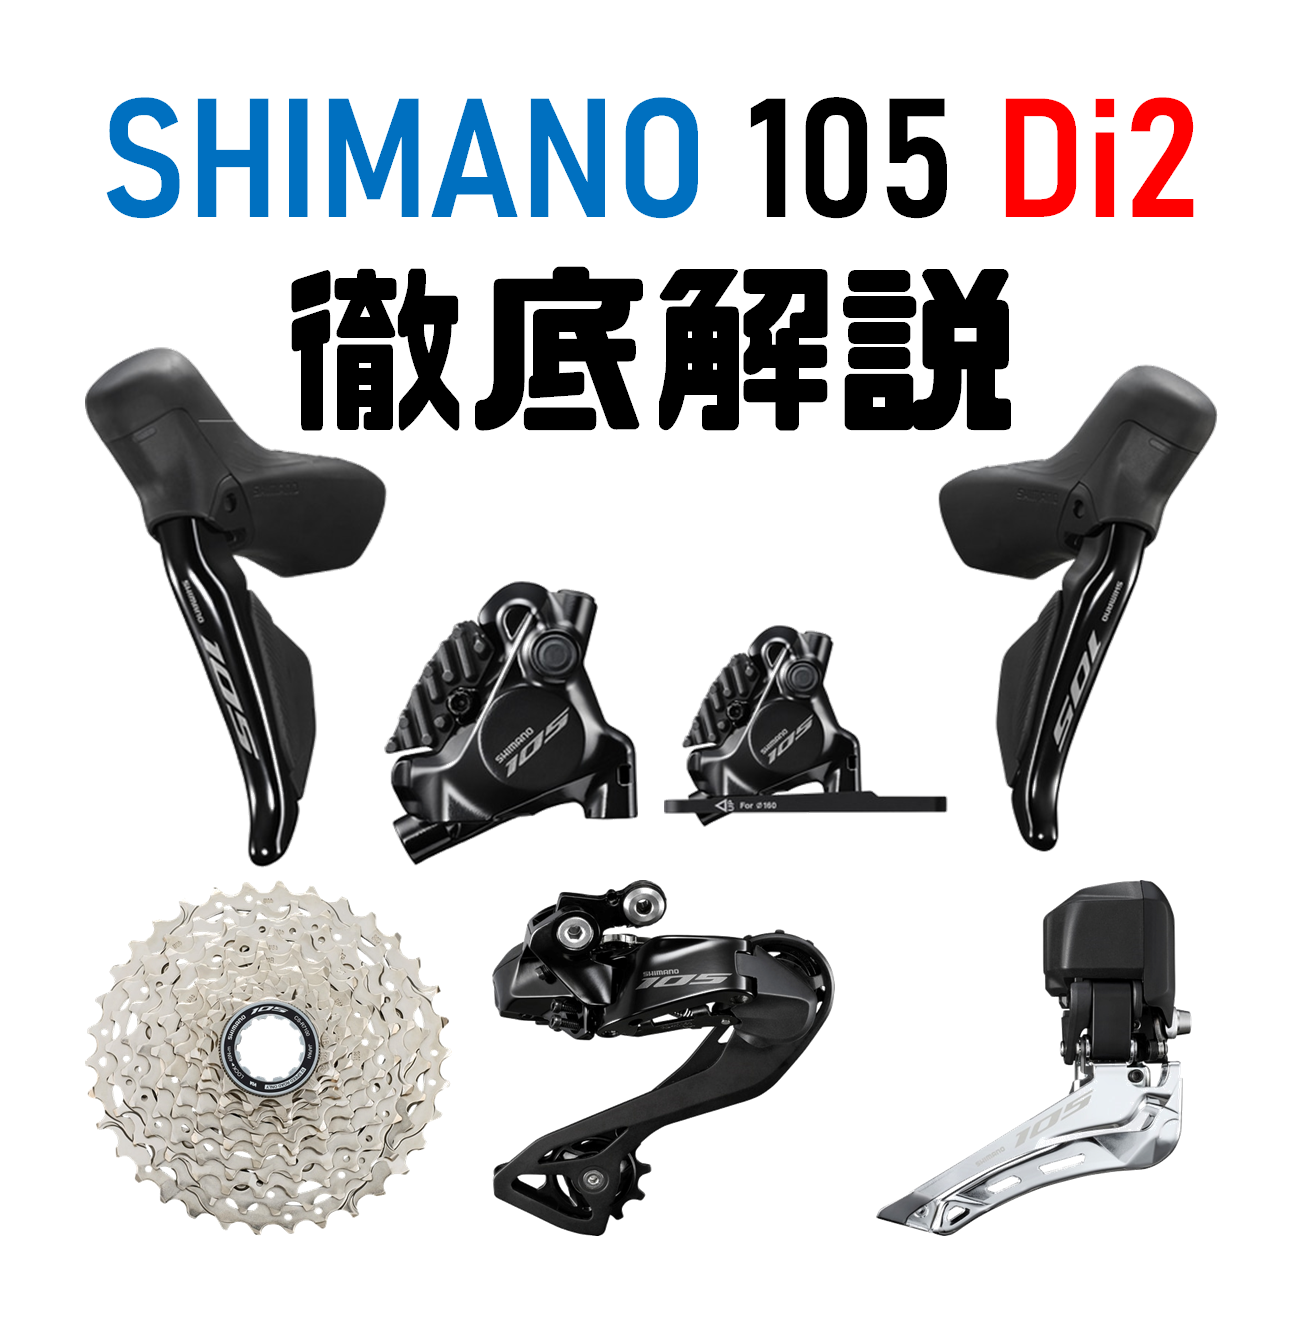 SHIMANO 105 Di2